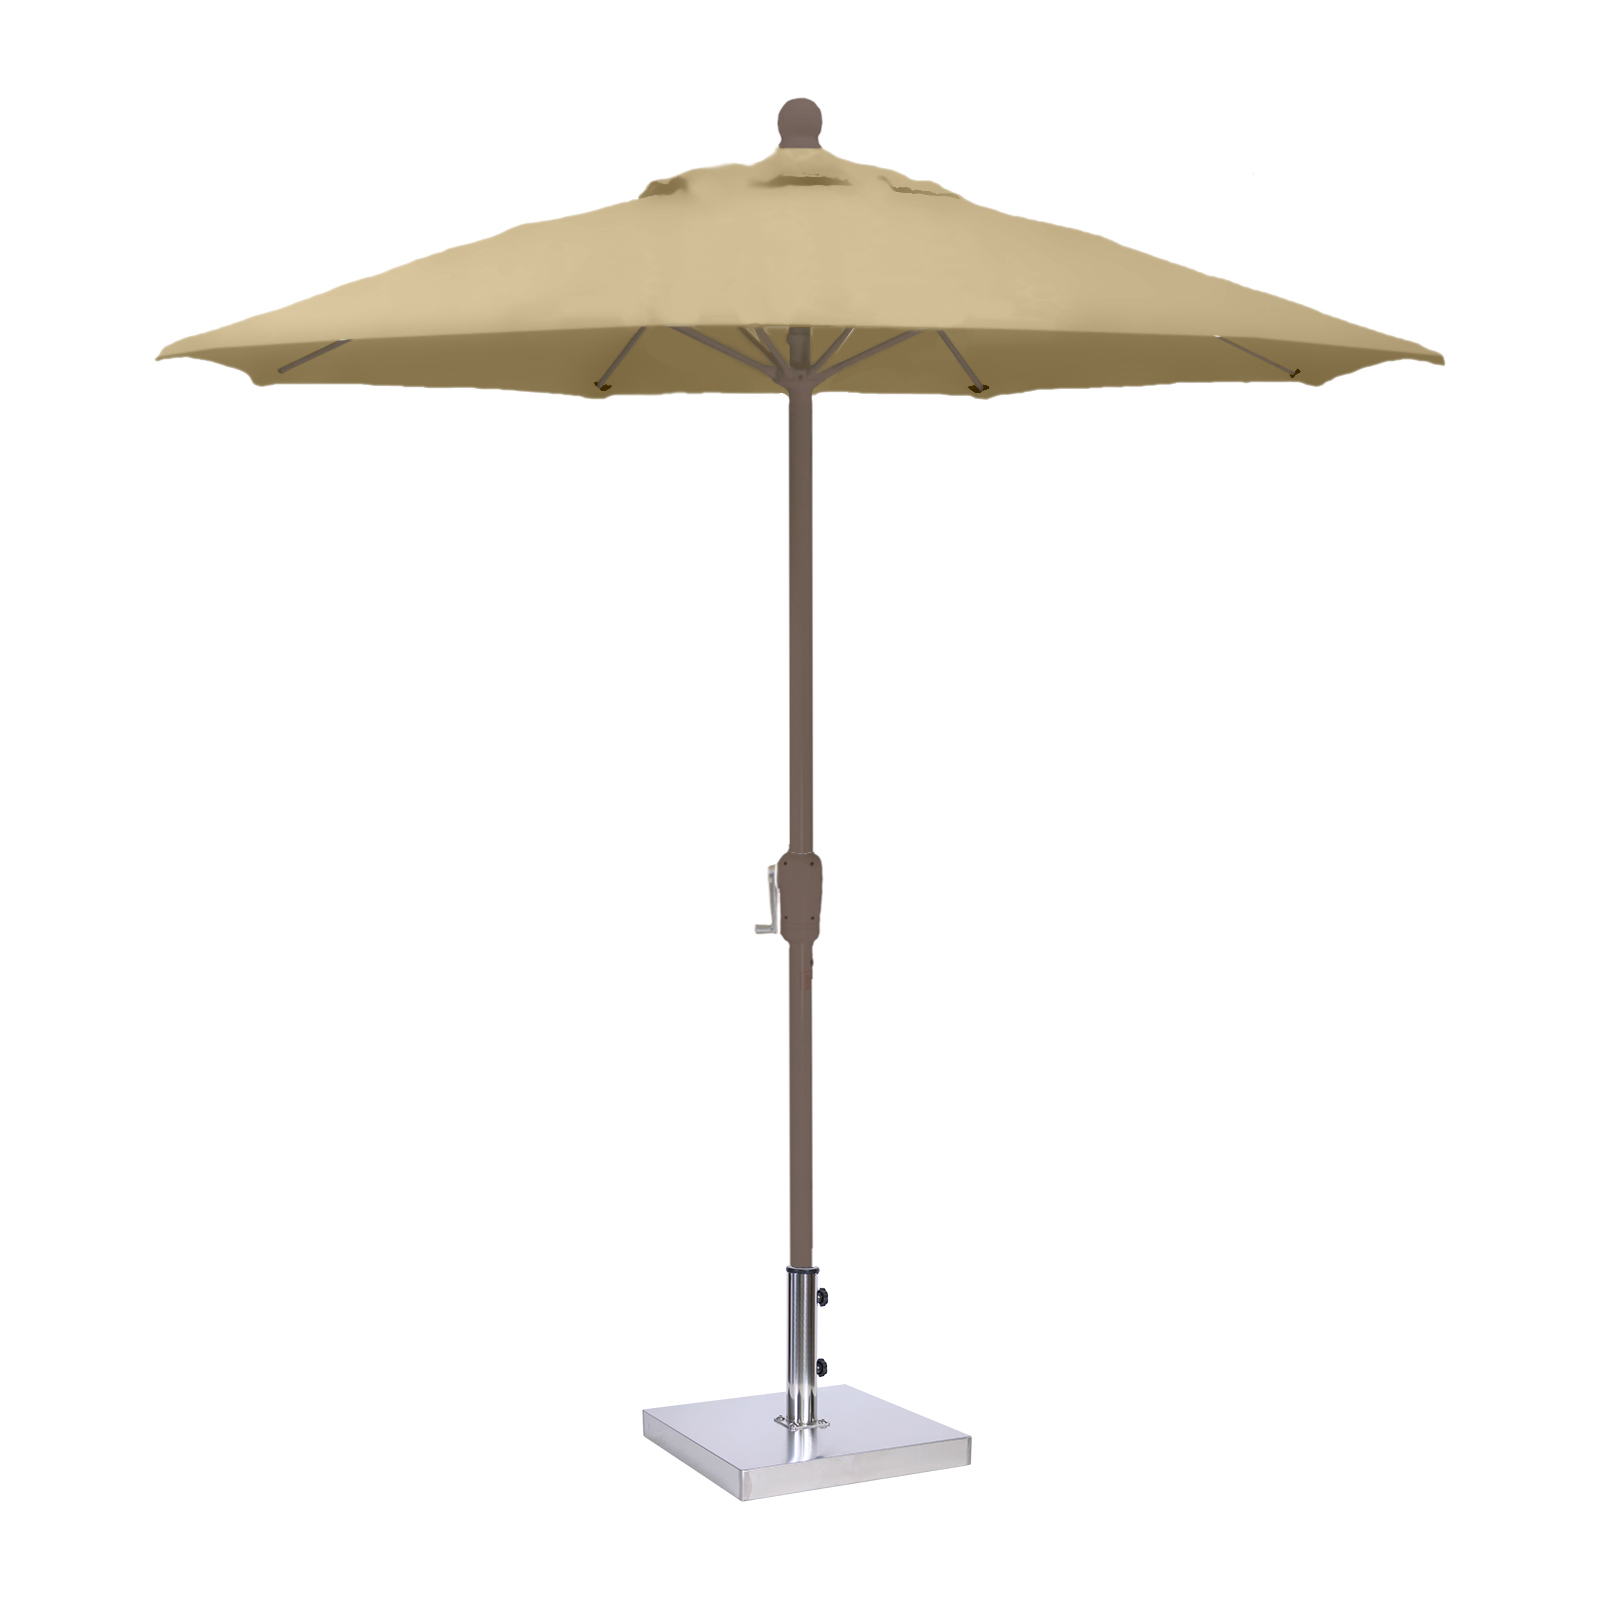 MiYu Furniture  7.5 ft Fiberglass Market Umbrella with Crank - Champagne Frame